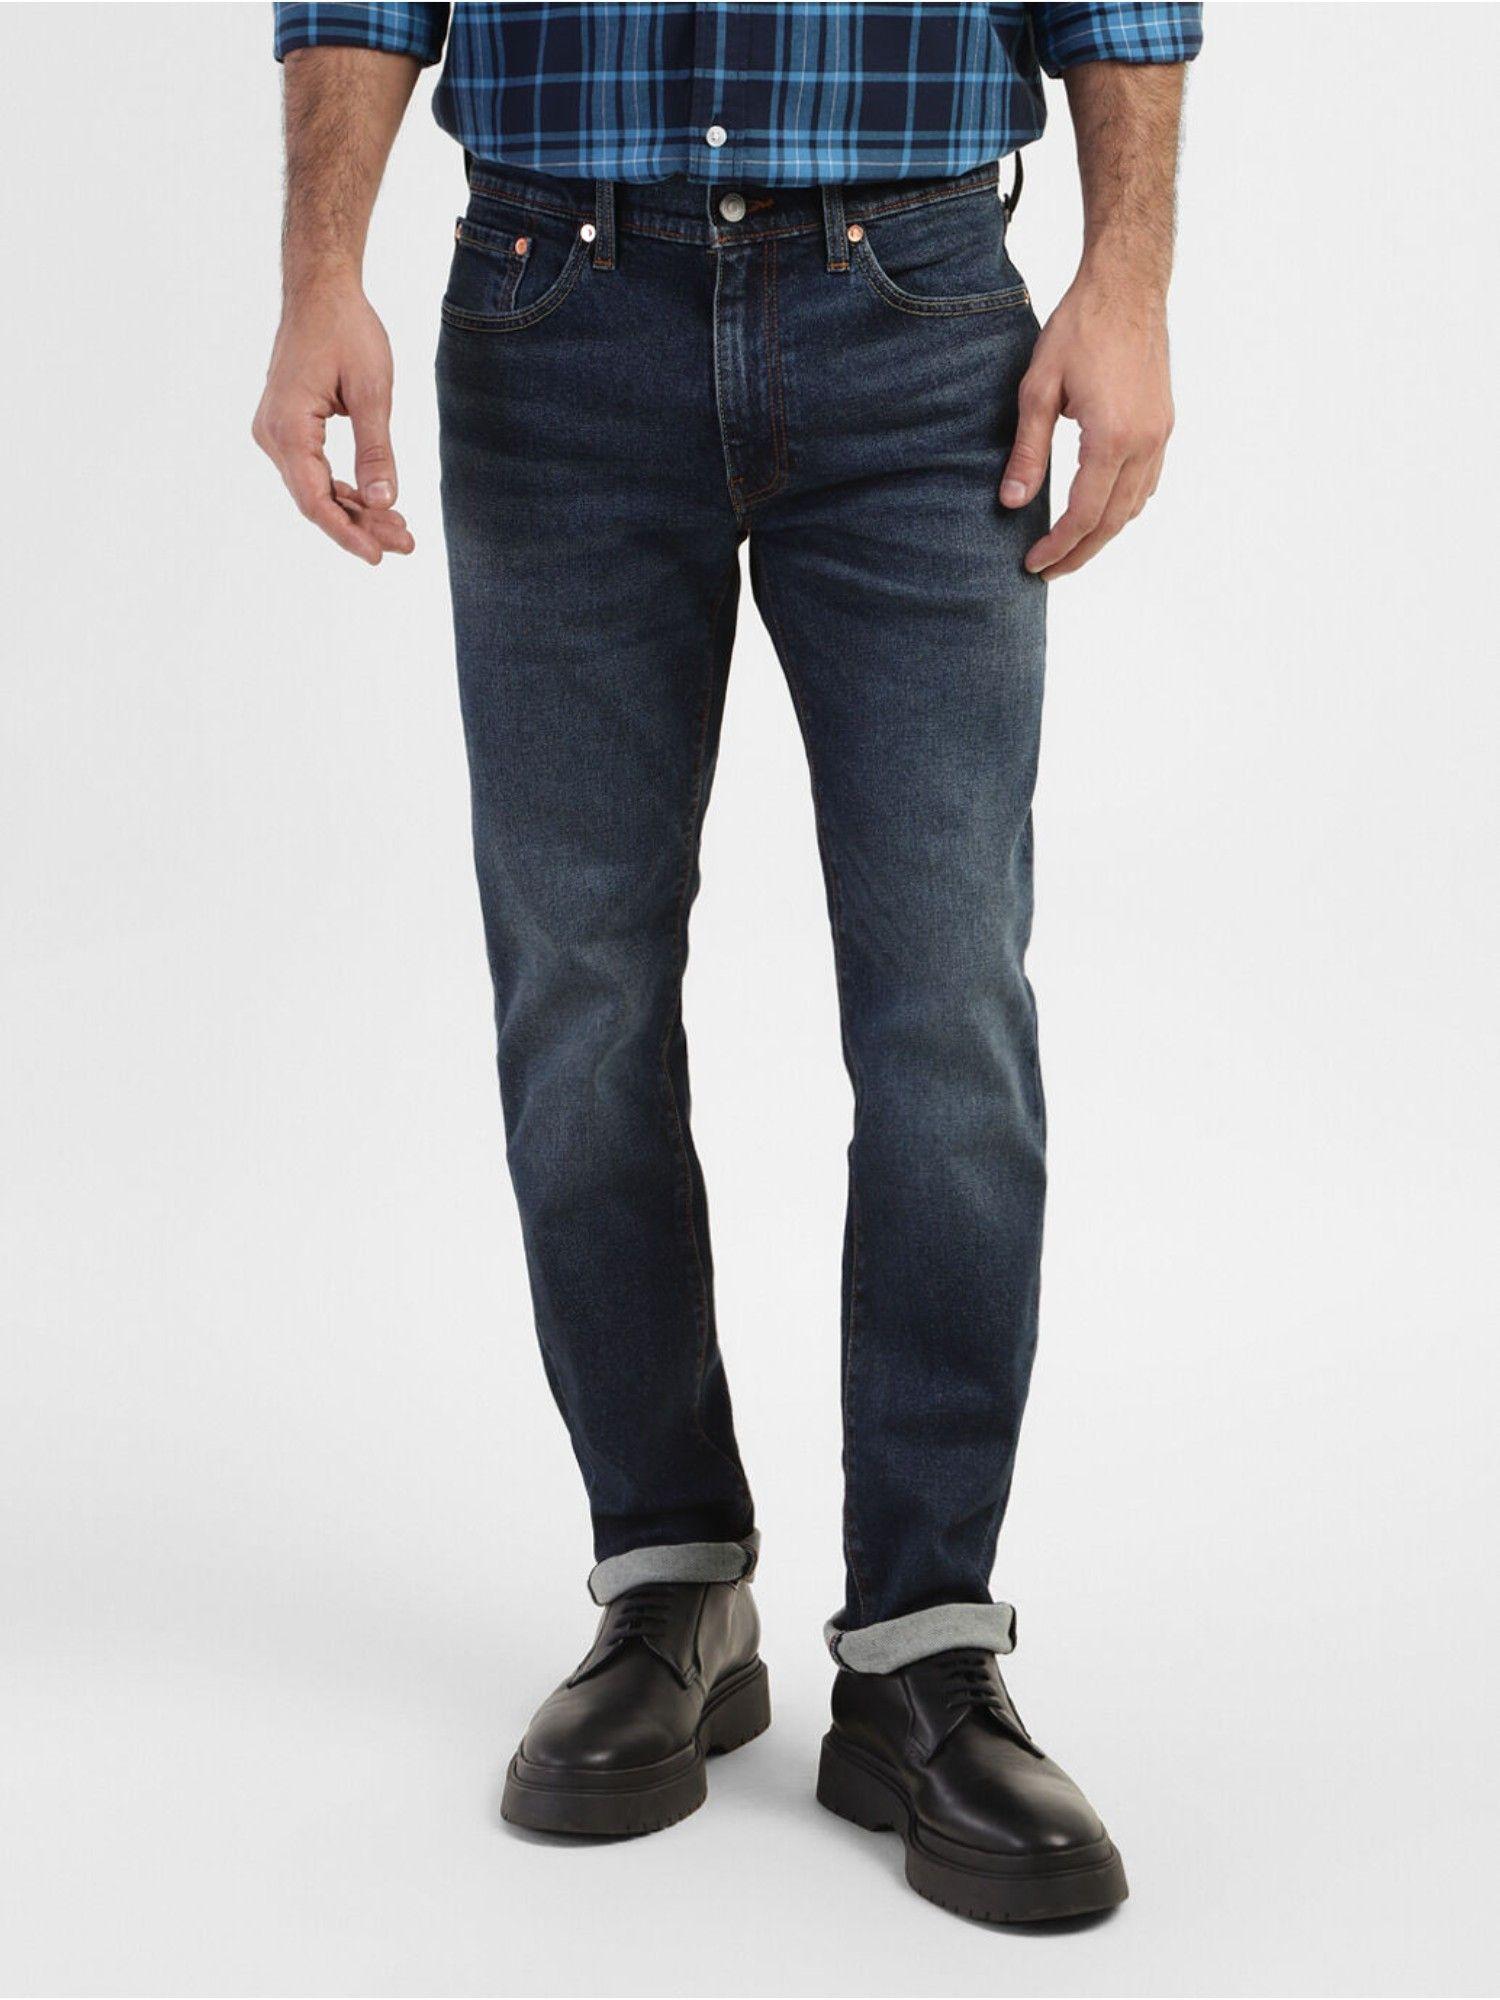 mens-511-blue-slim-fit-jeans